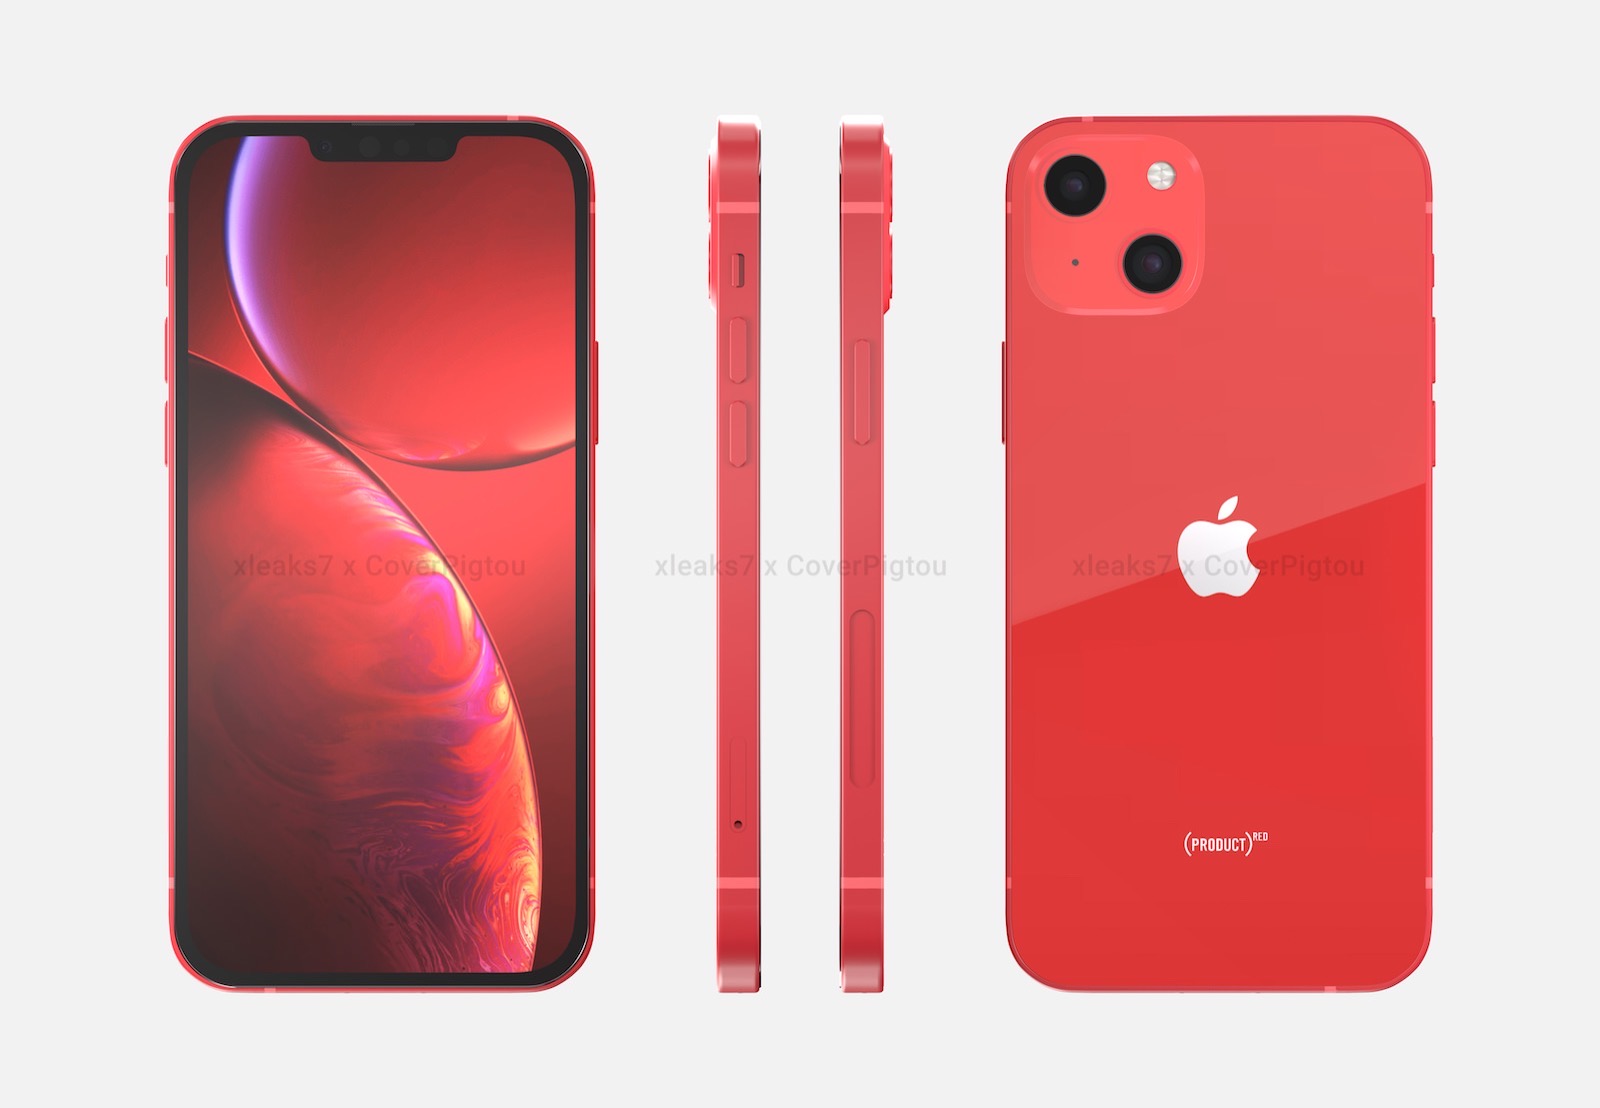 iPhone 13の(PRODUCT)REDモデル、モックアップ画像が公開 | ゴリミー